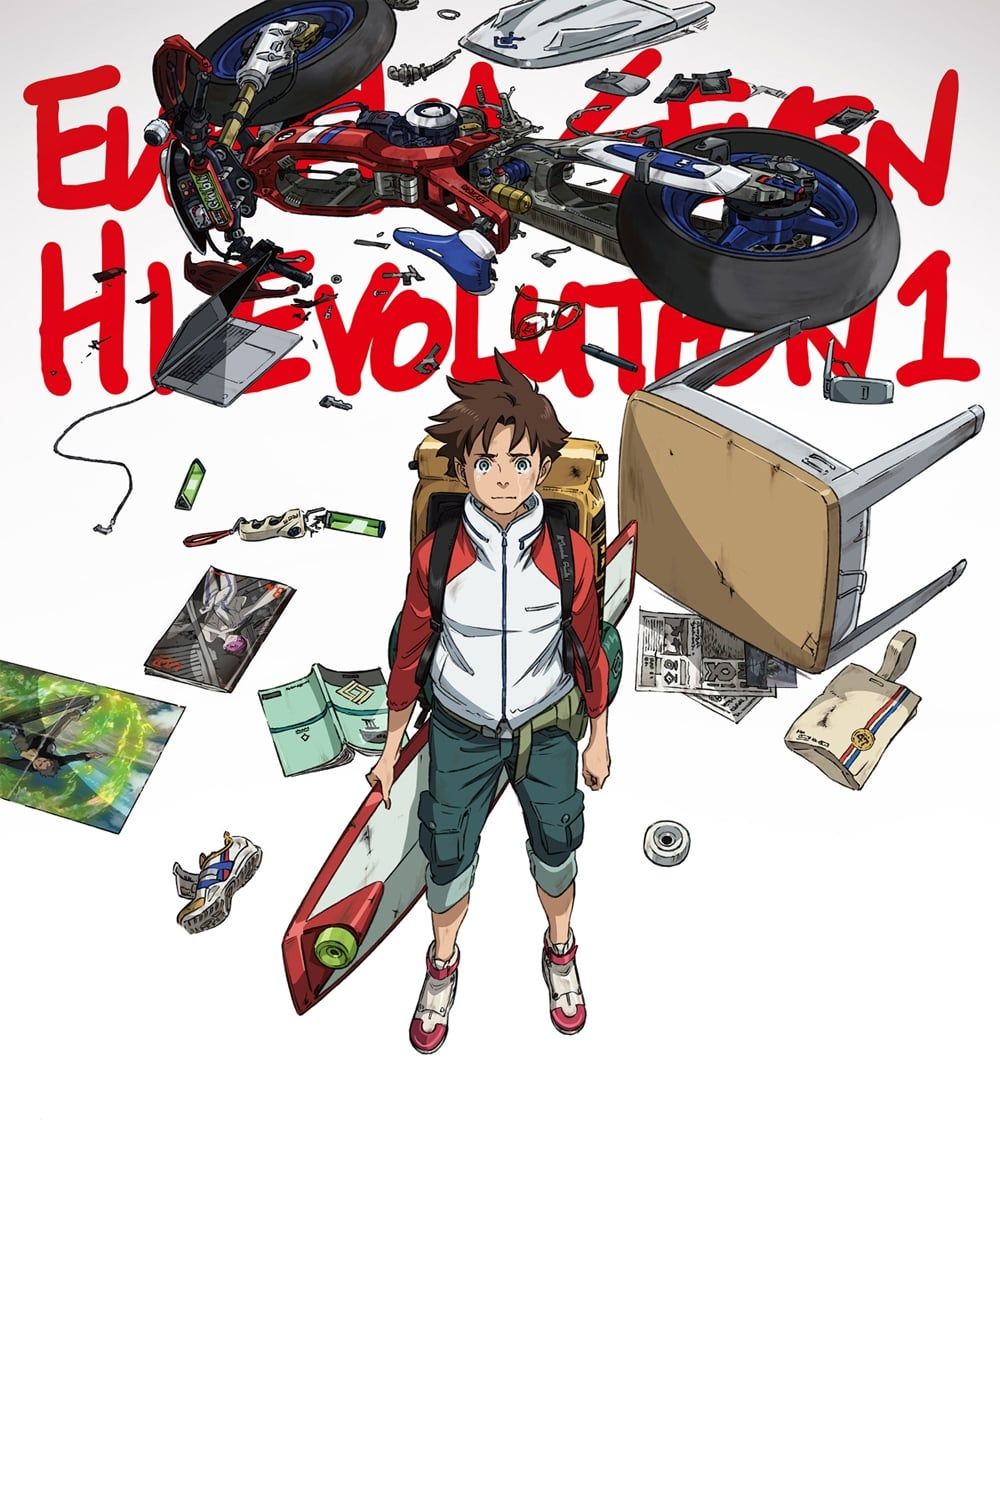 [Adventure] Koukyoushihen Eureka Seven Hi-Evolution 3: Eureka (Movie) (Sub) Redraw